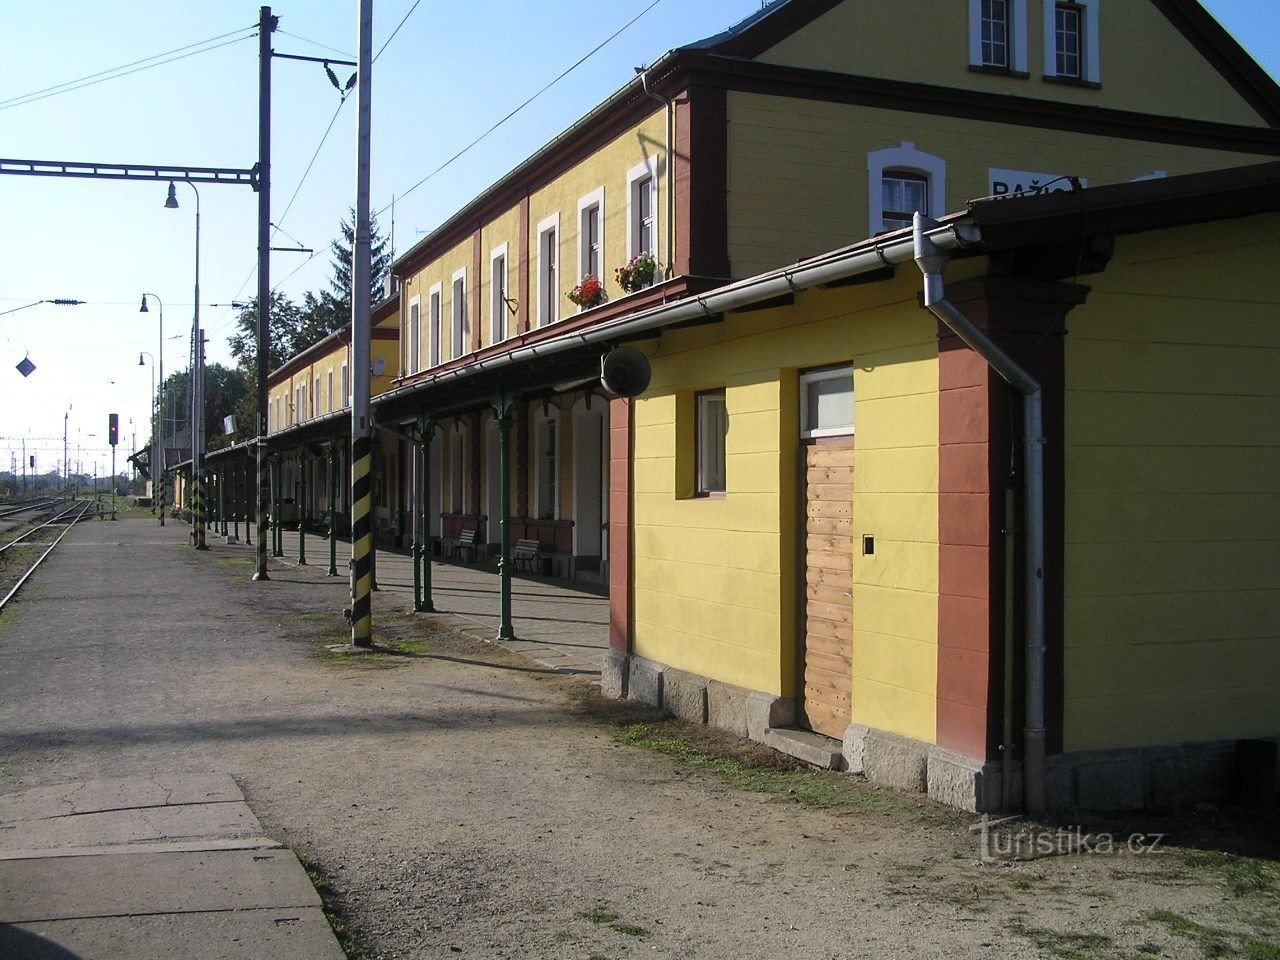 Razice - Bahnhof